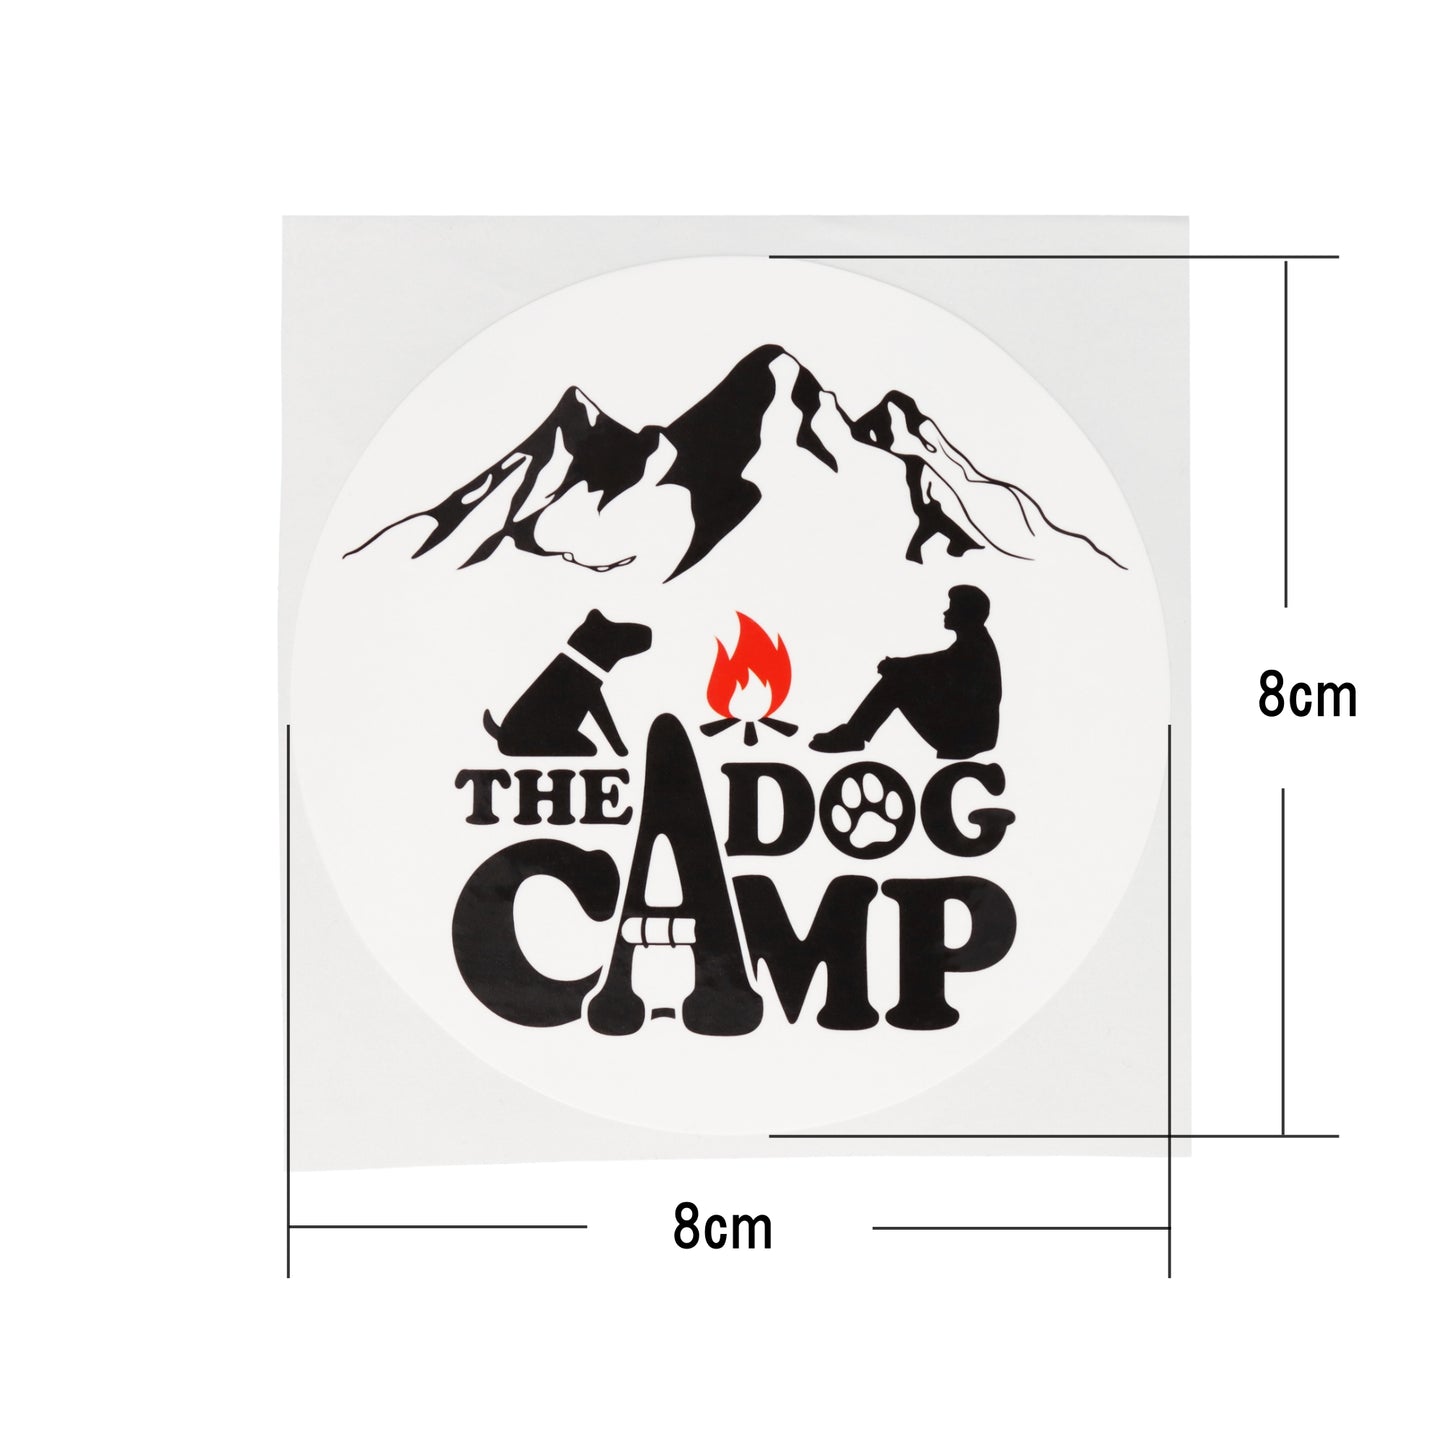 THE DOG CAMP 丸形キャンプステッカー